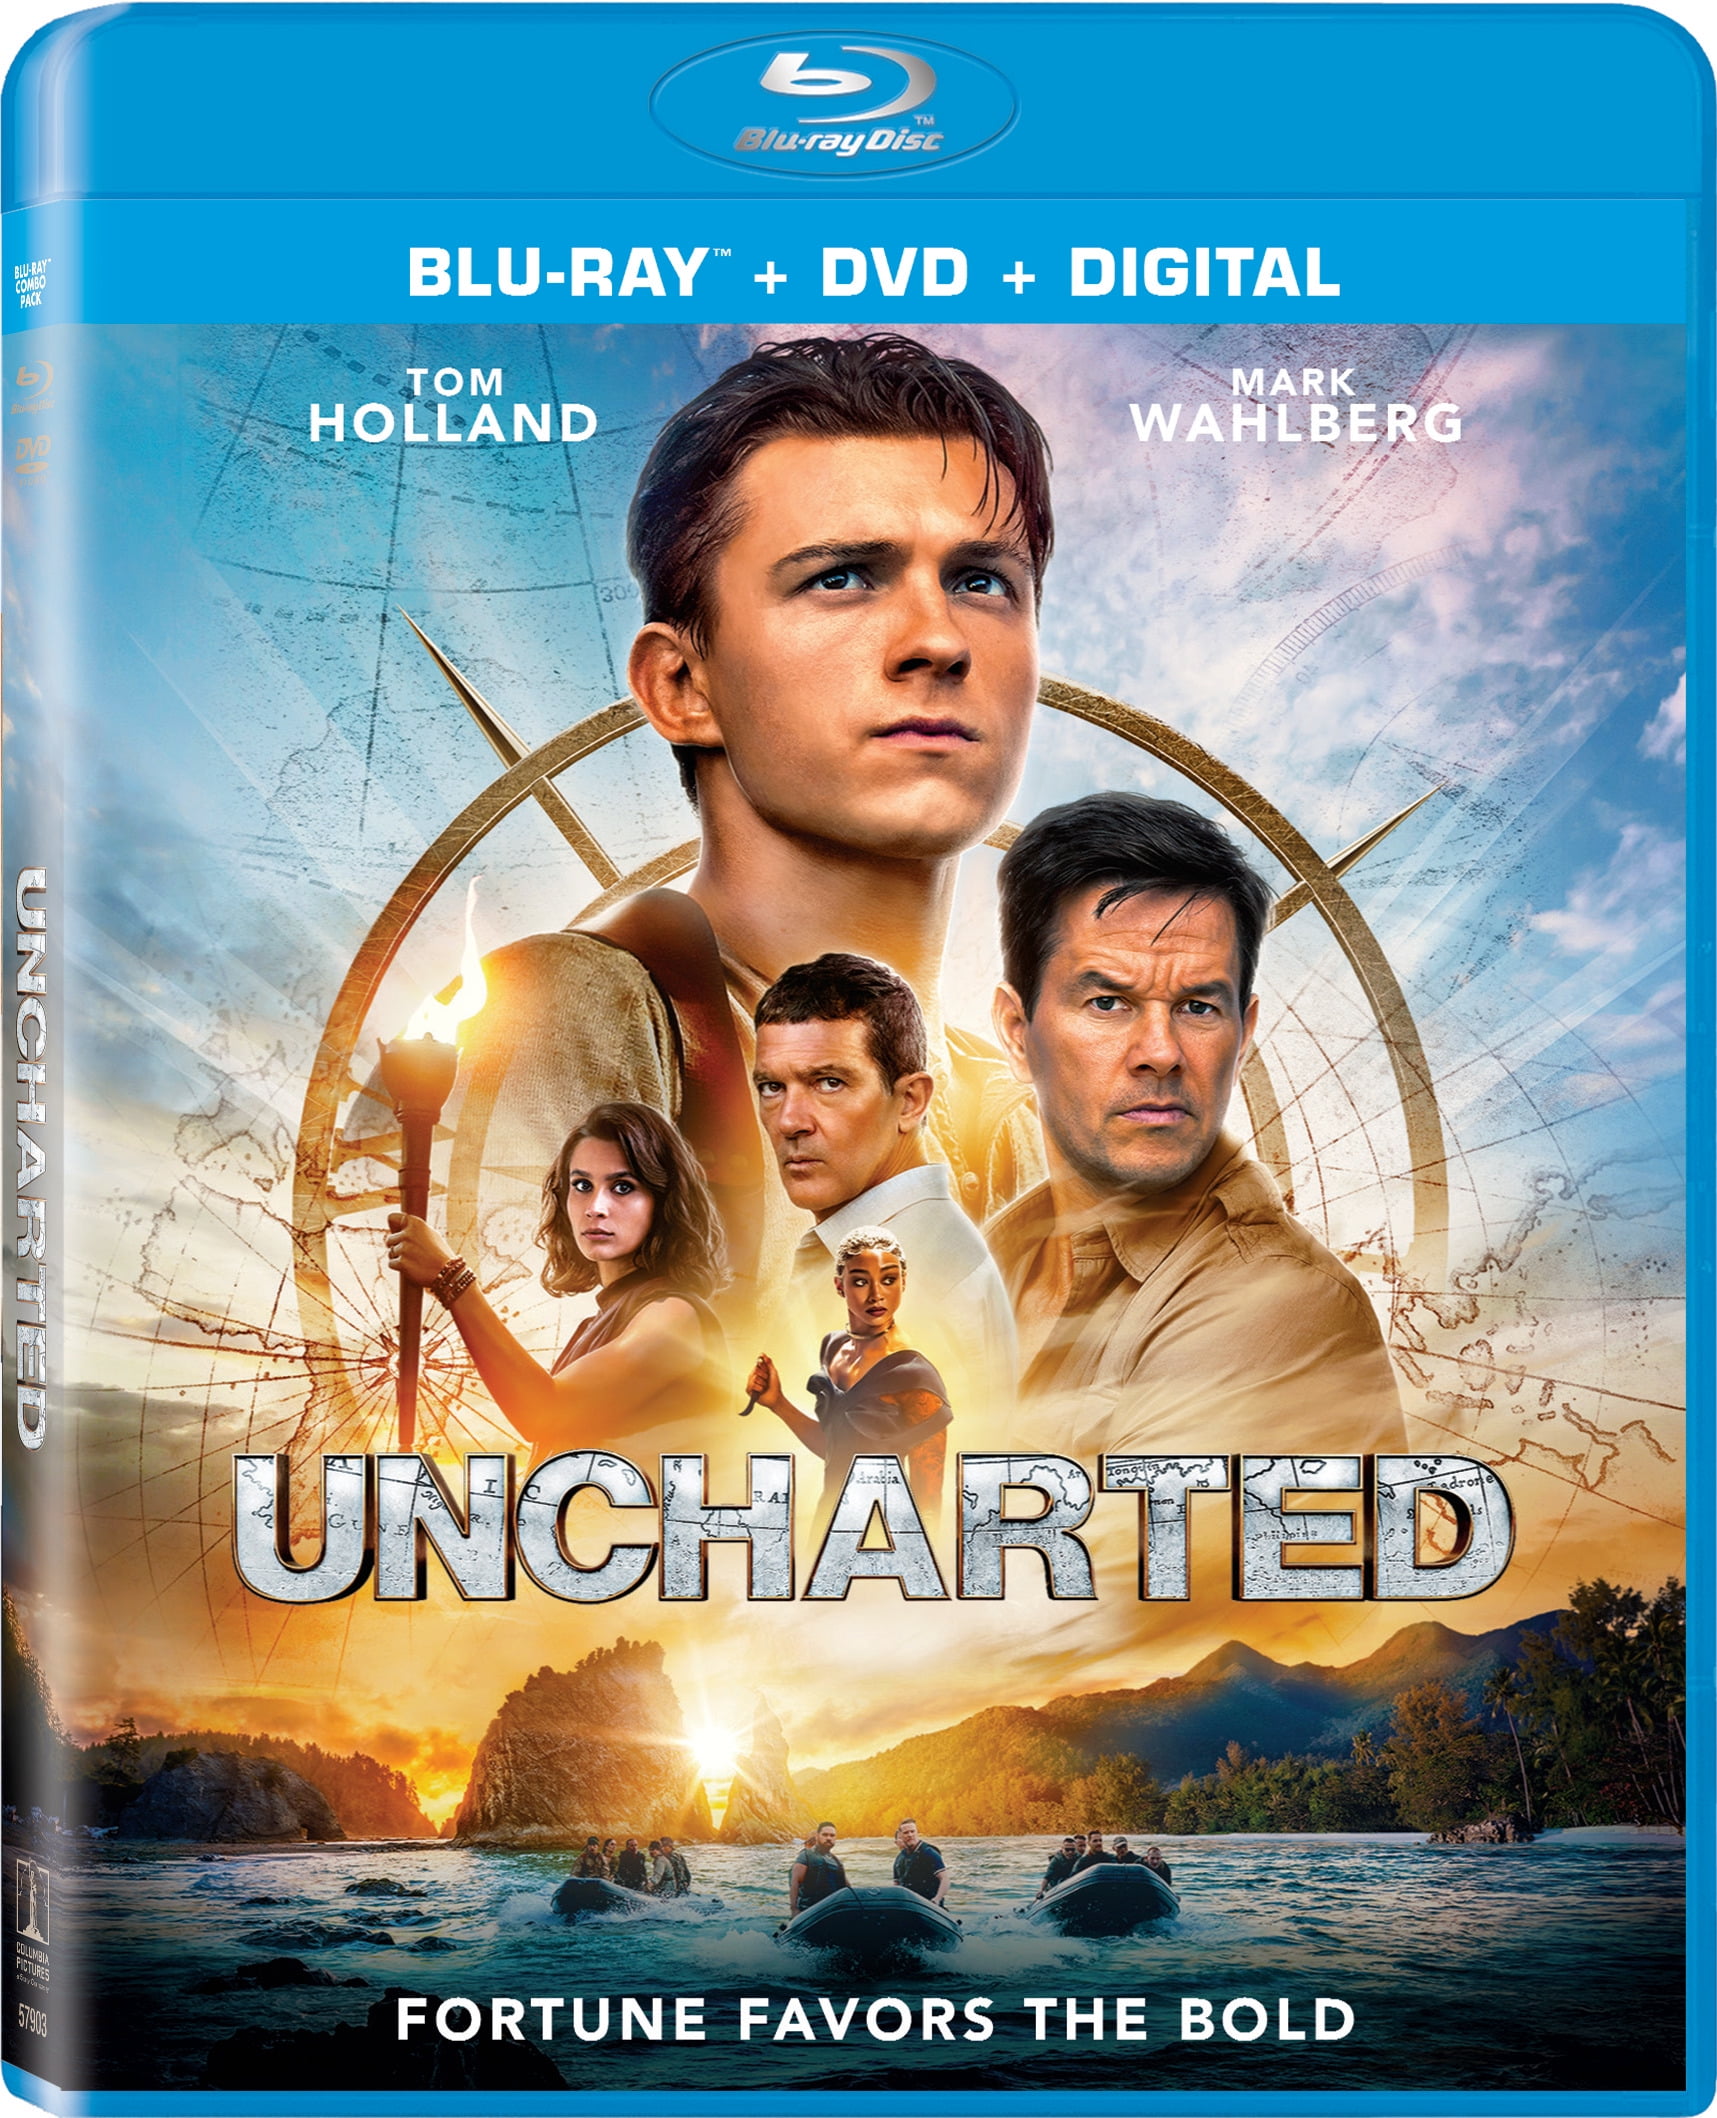 SPHE Uncharted (Blu-ray + DVD + Digital Copy)